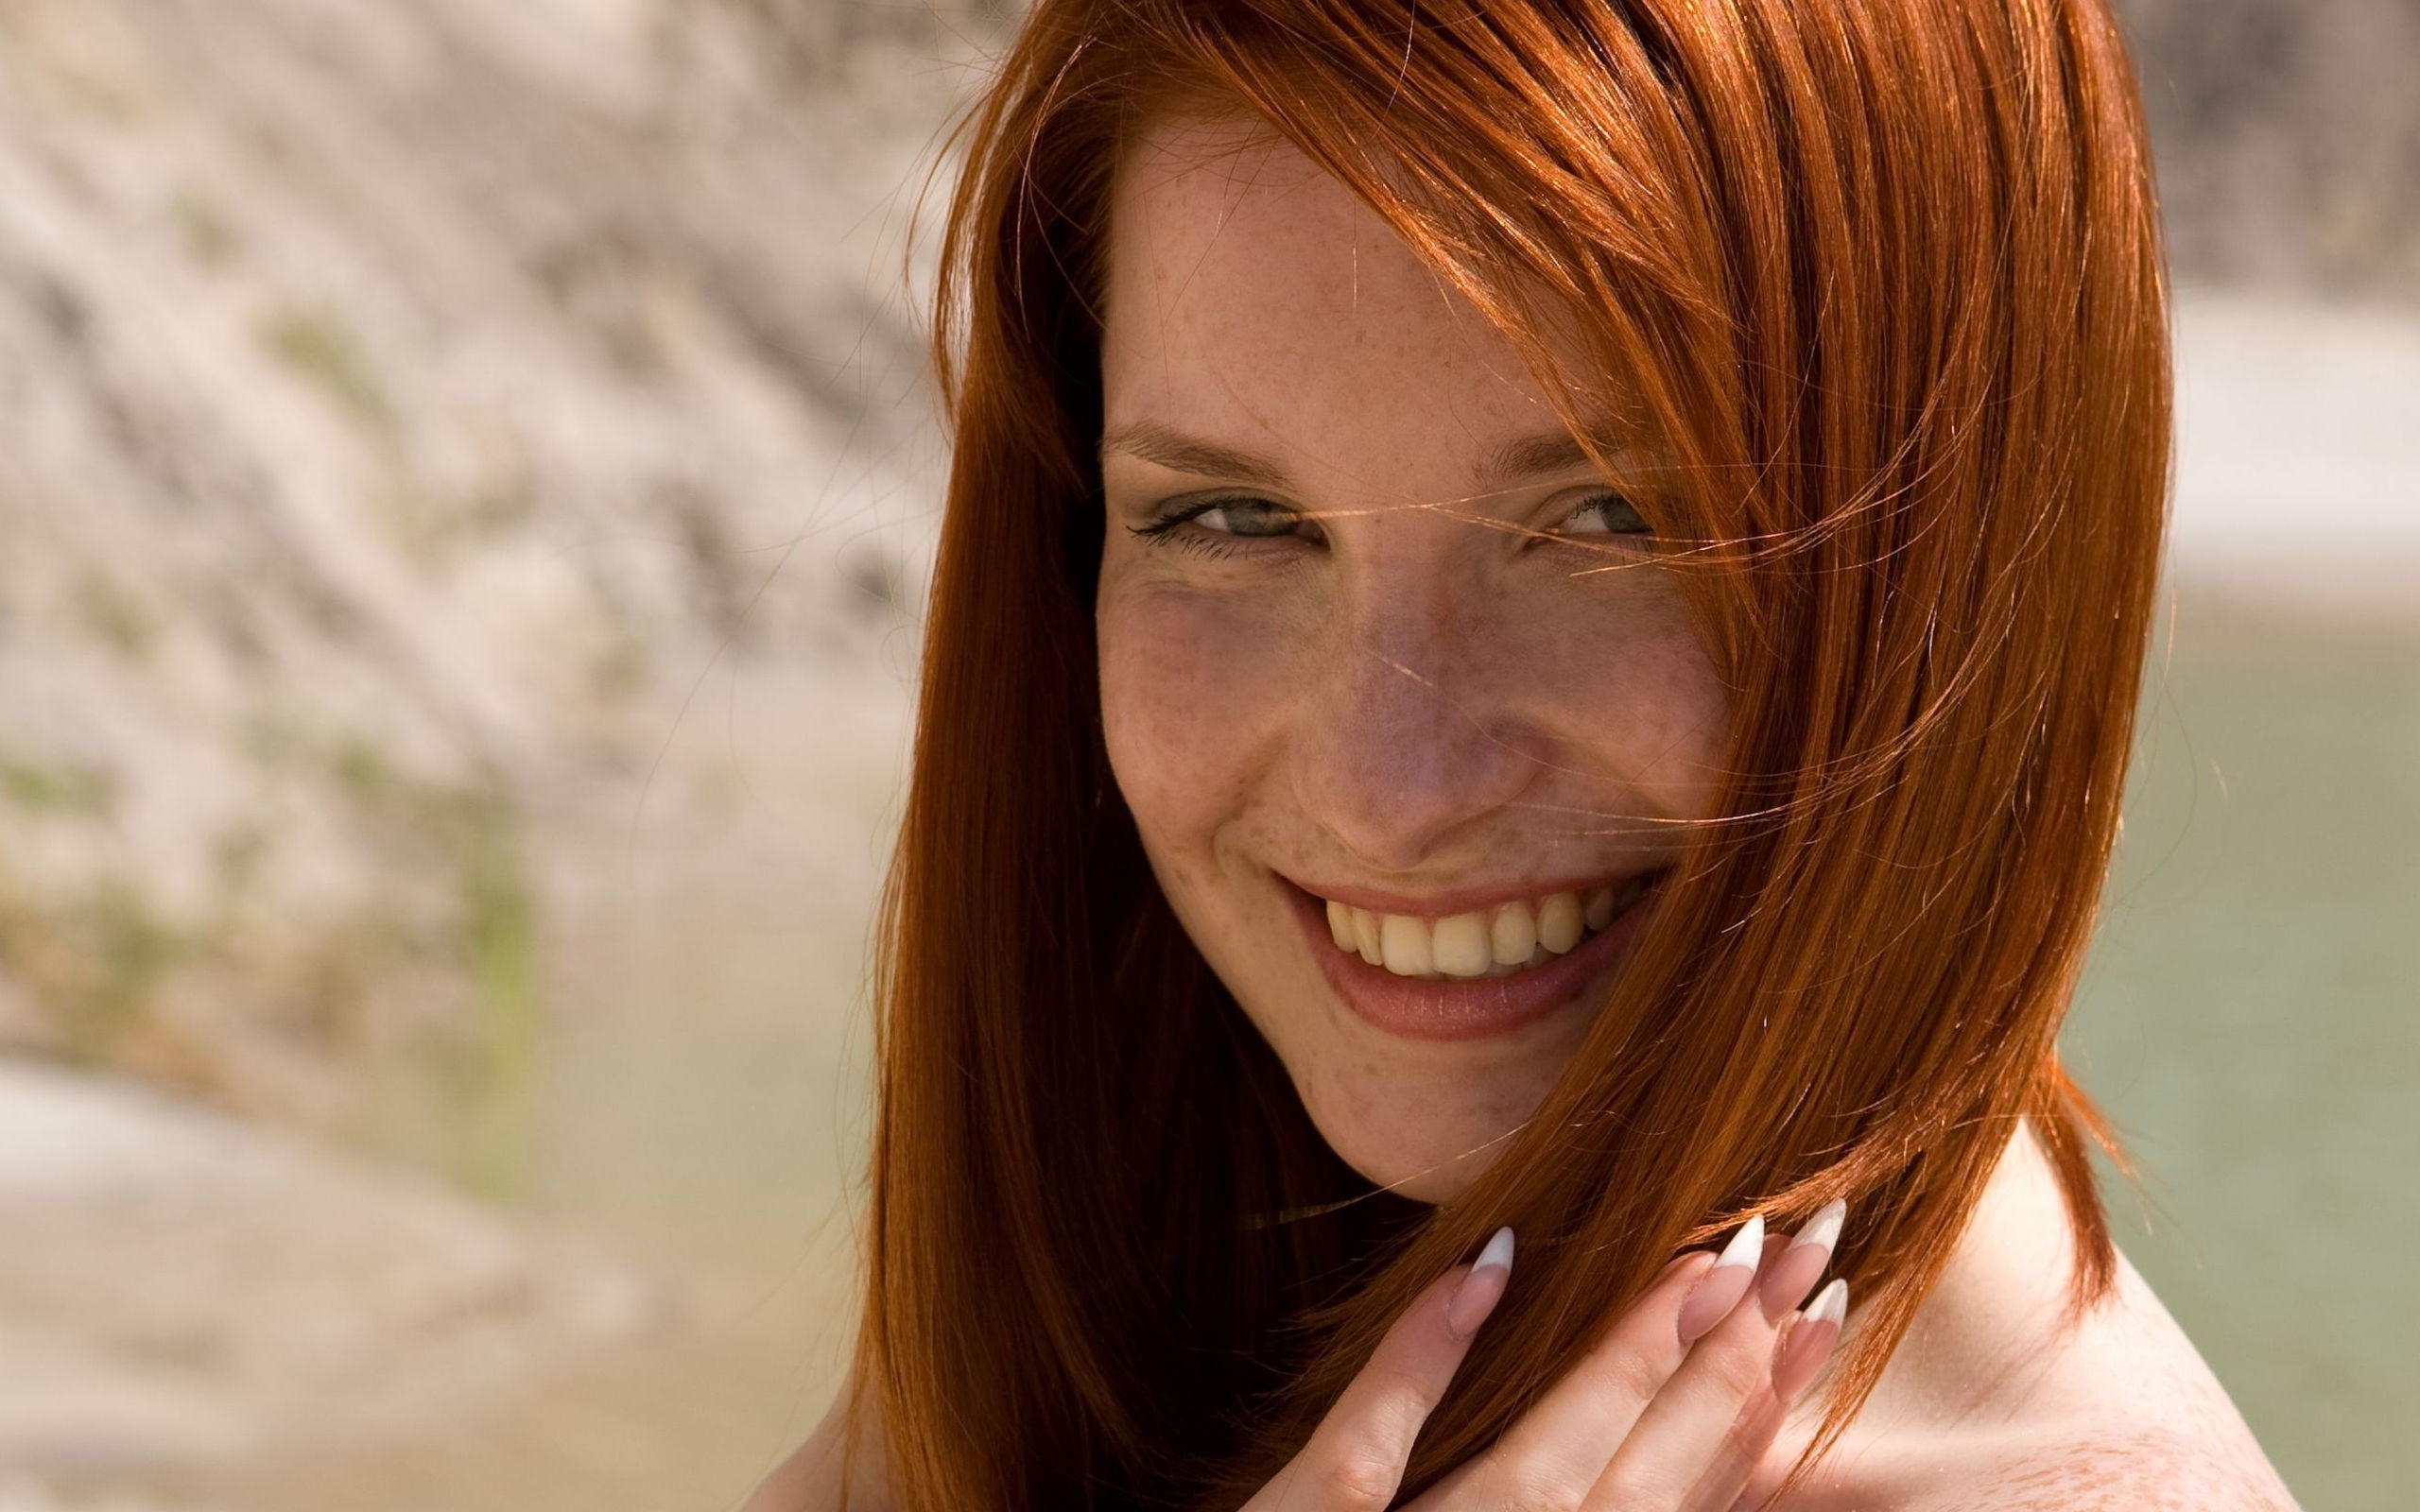 women model redhead long hair face freckles portrait smiling women outdoors Wallpaper